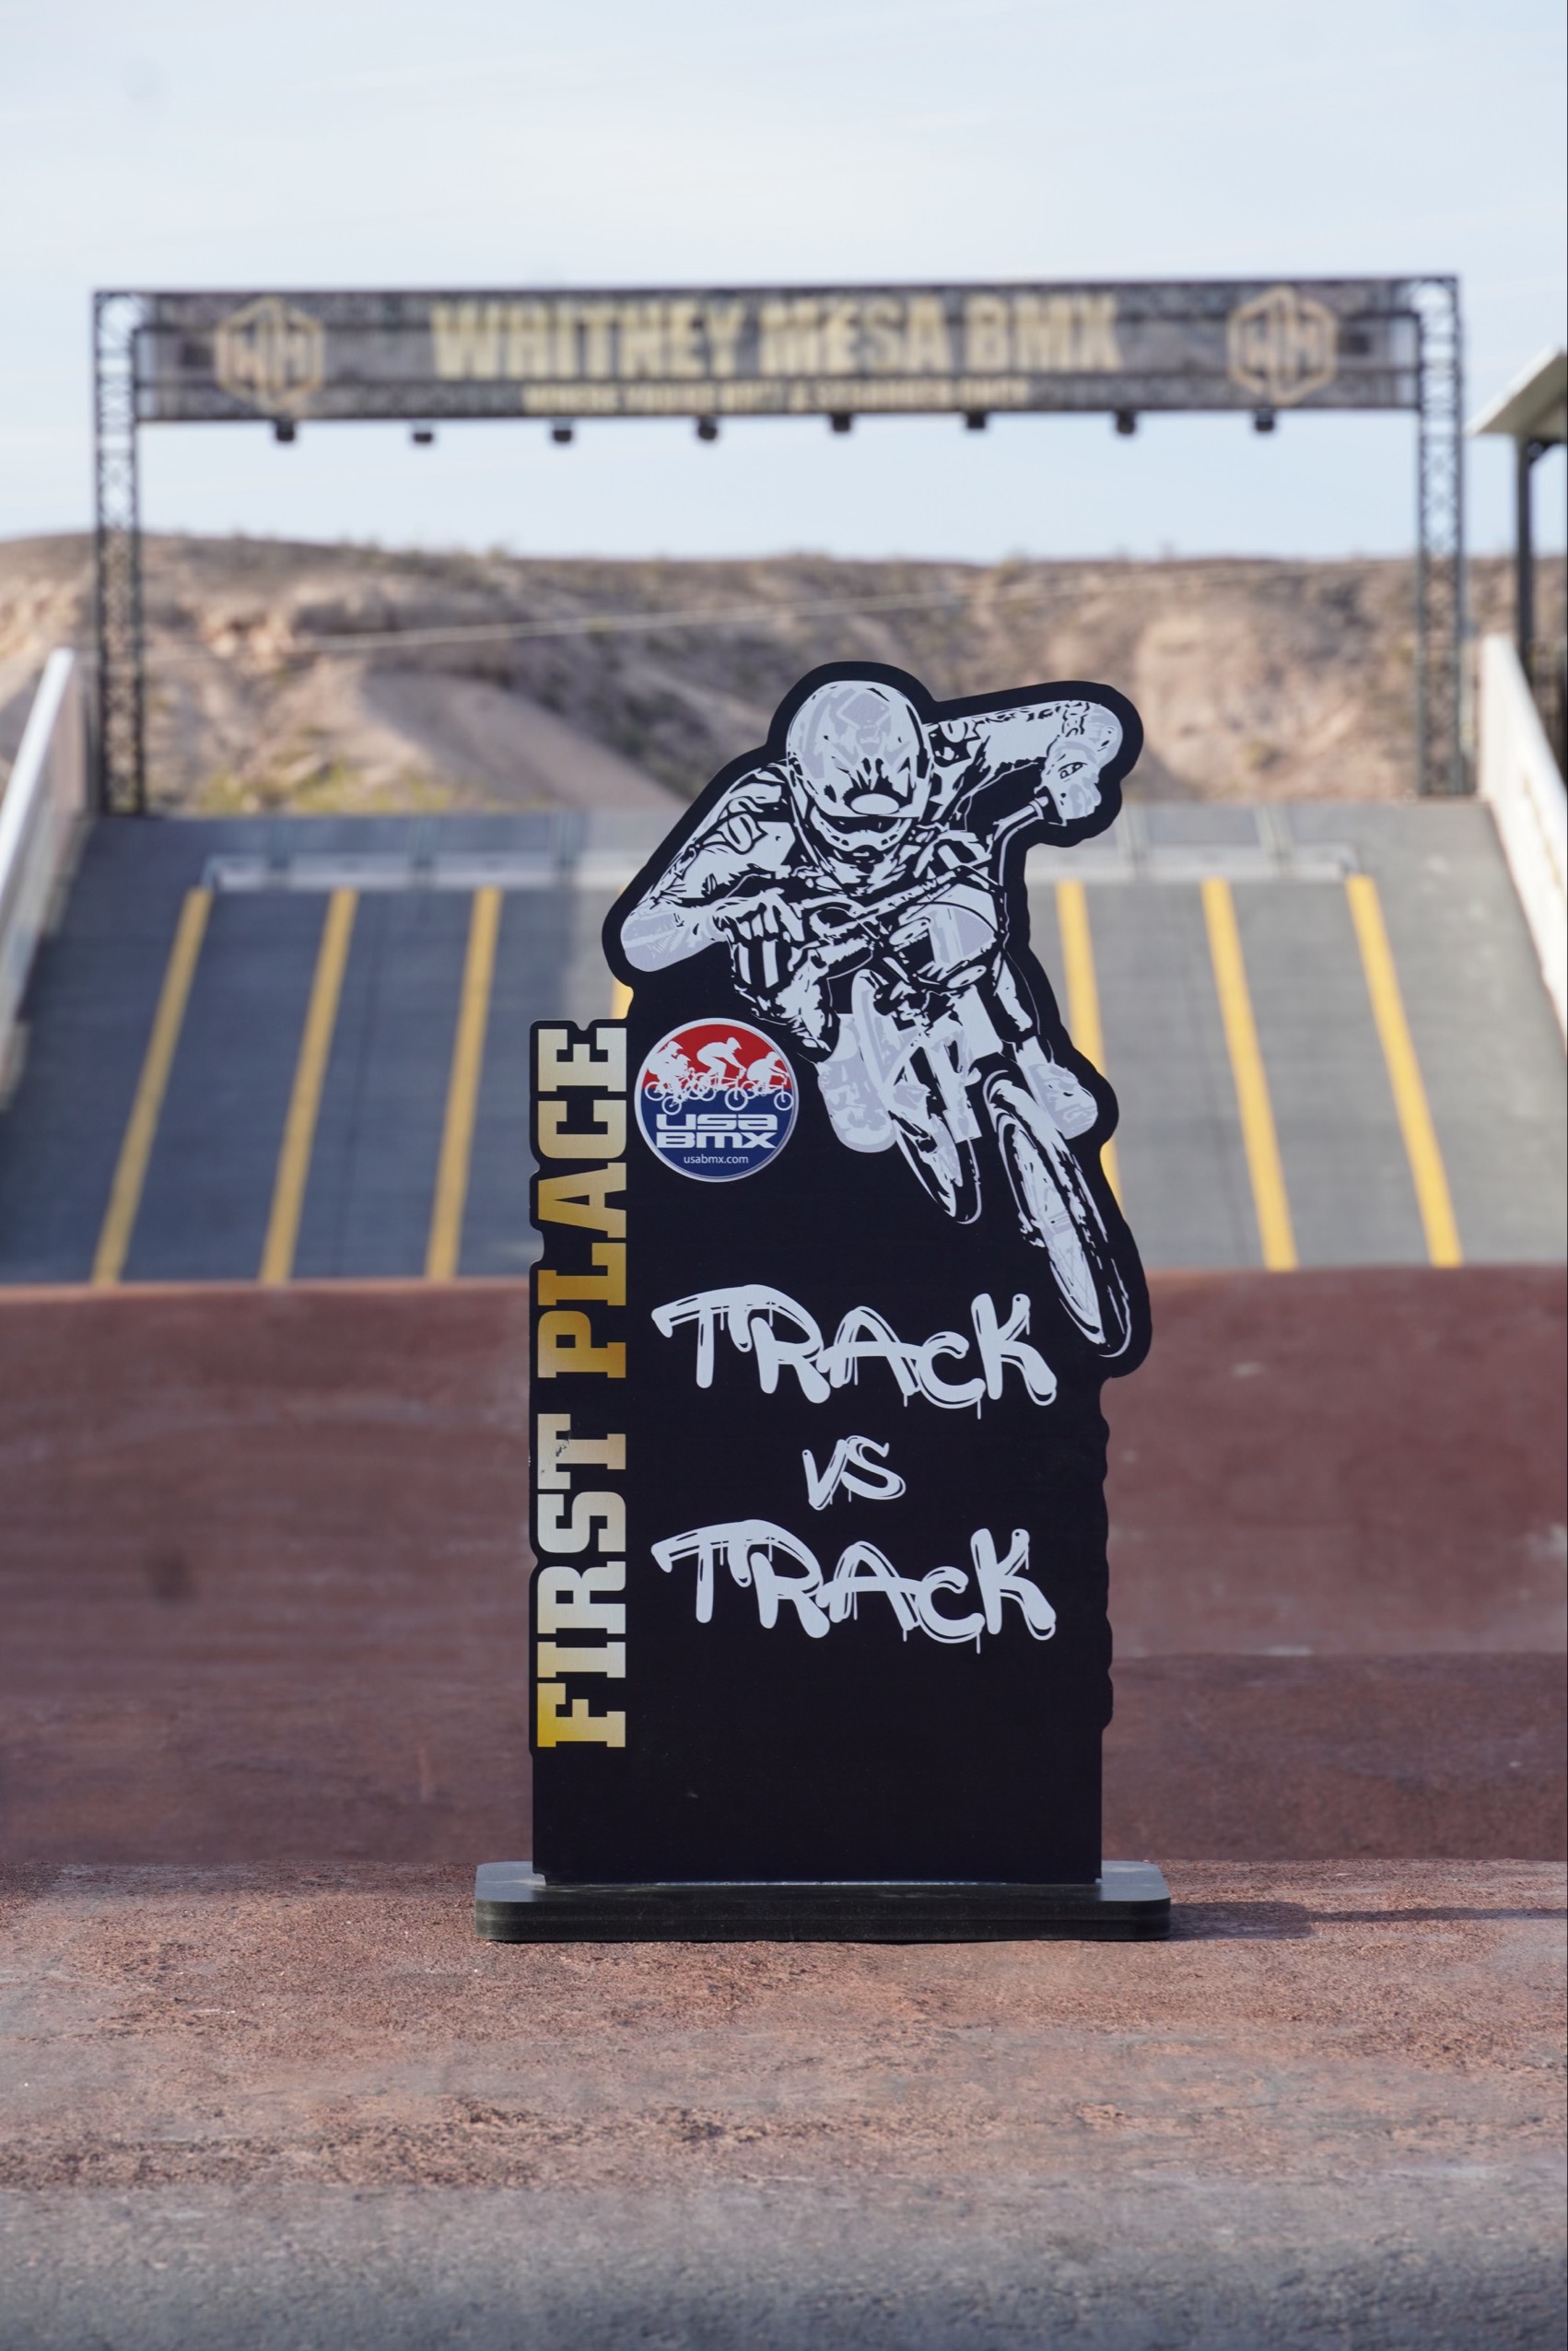 Whitney Mesa BMX Track